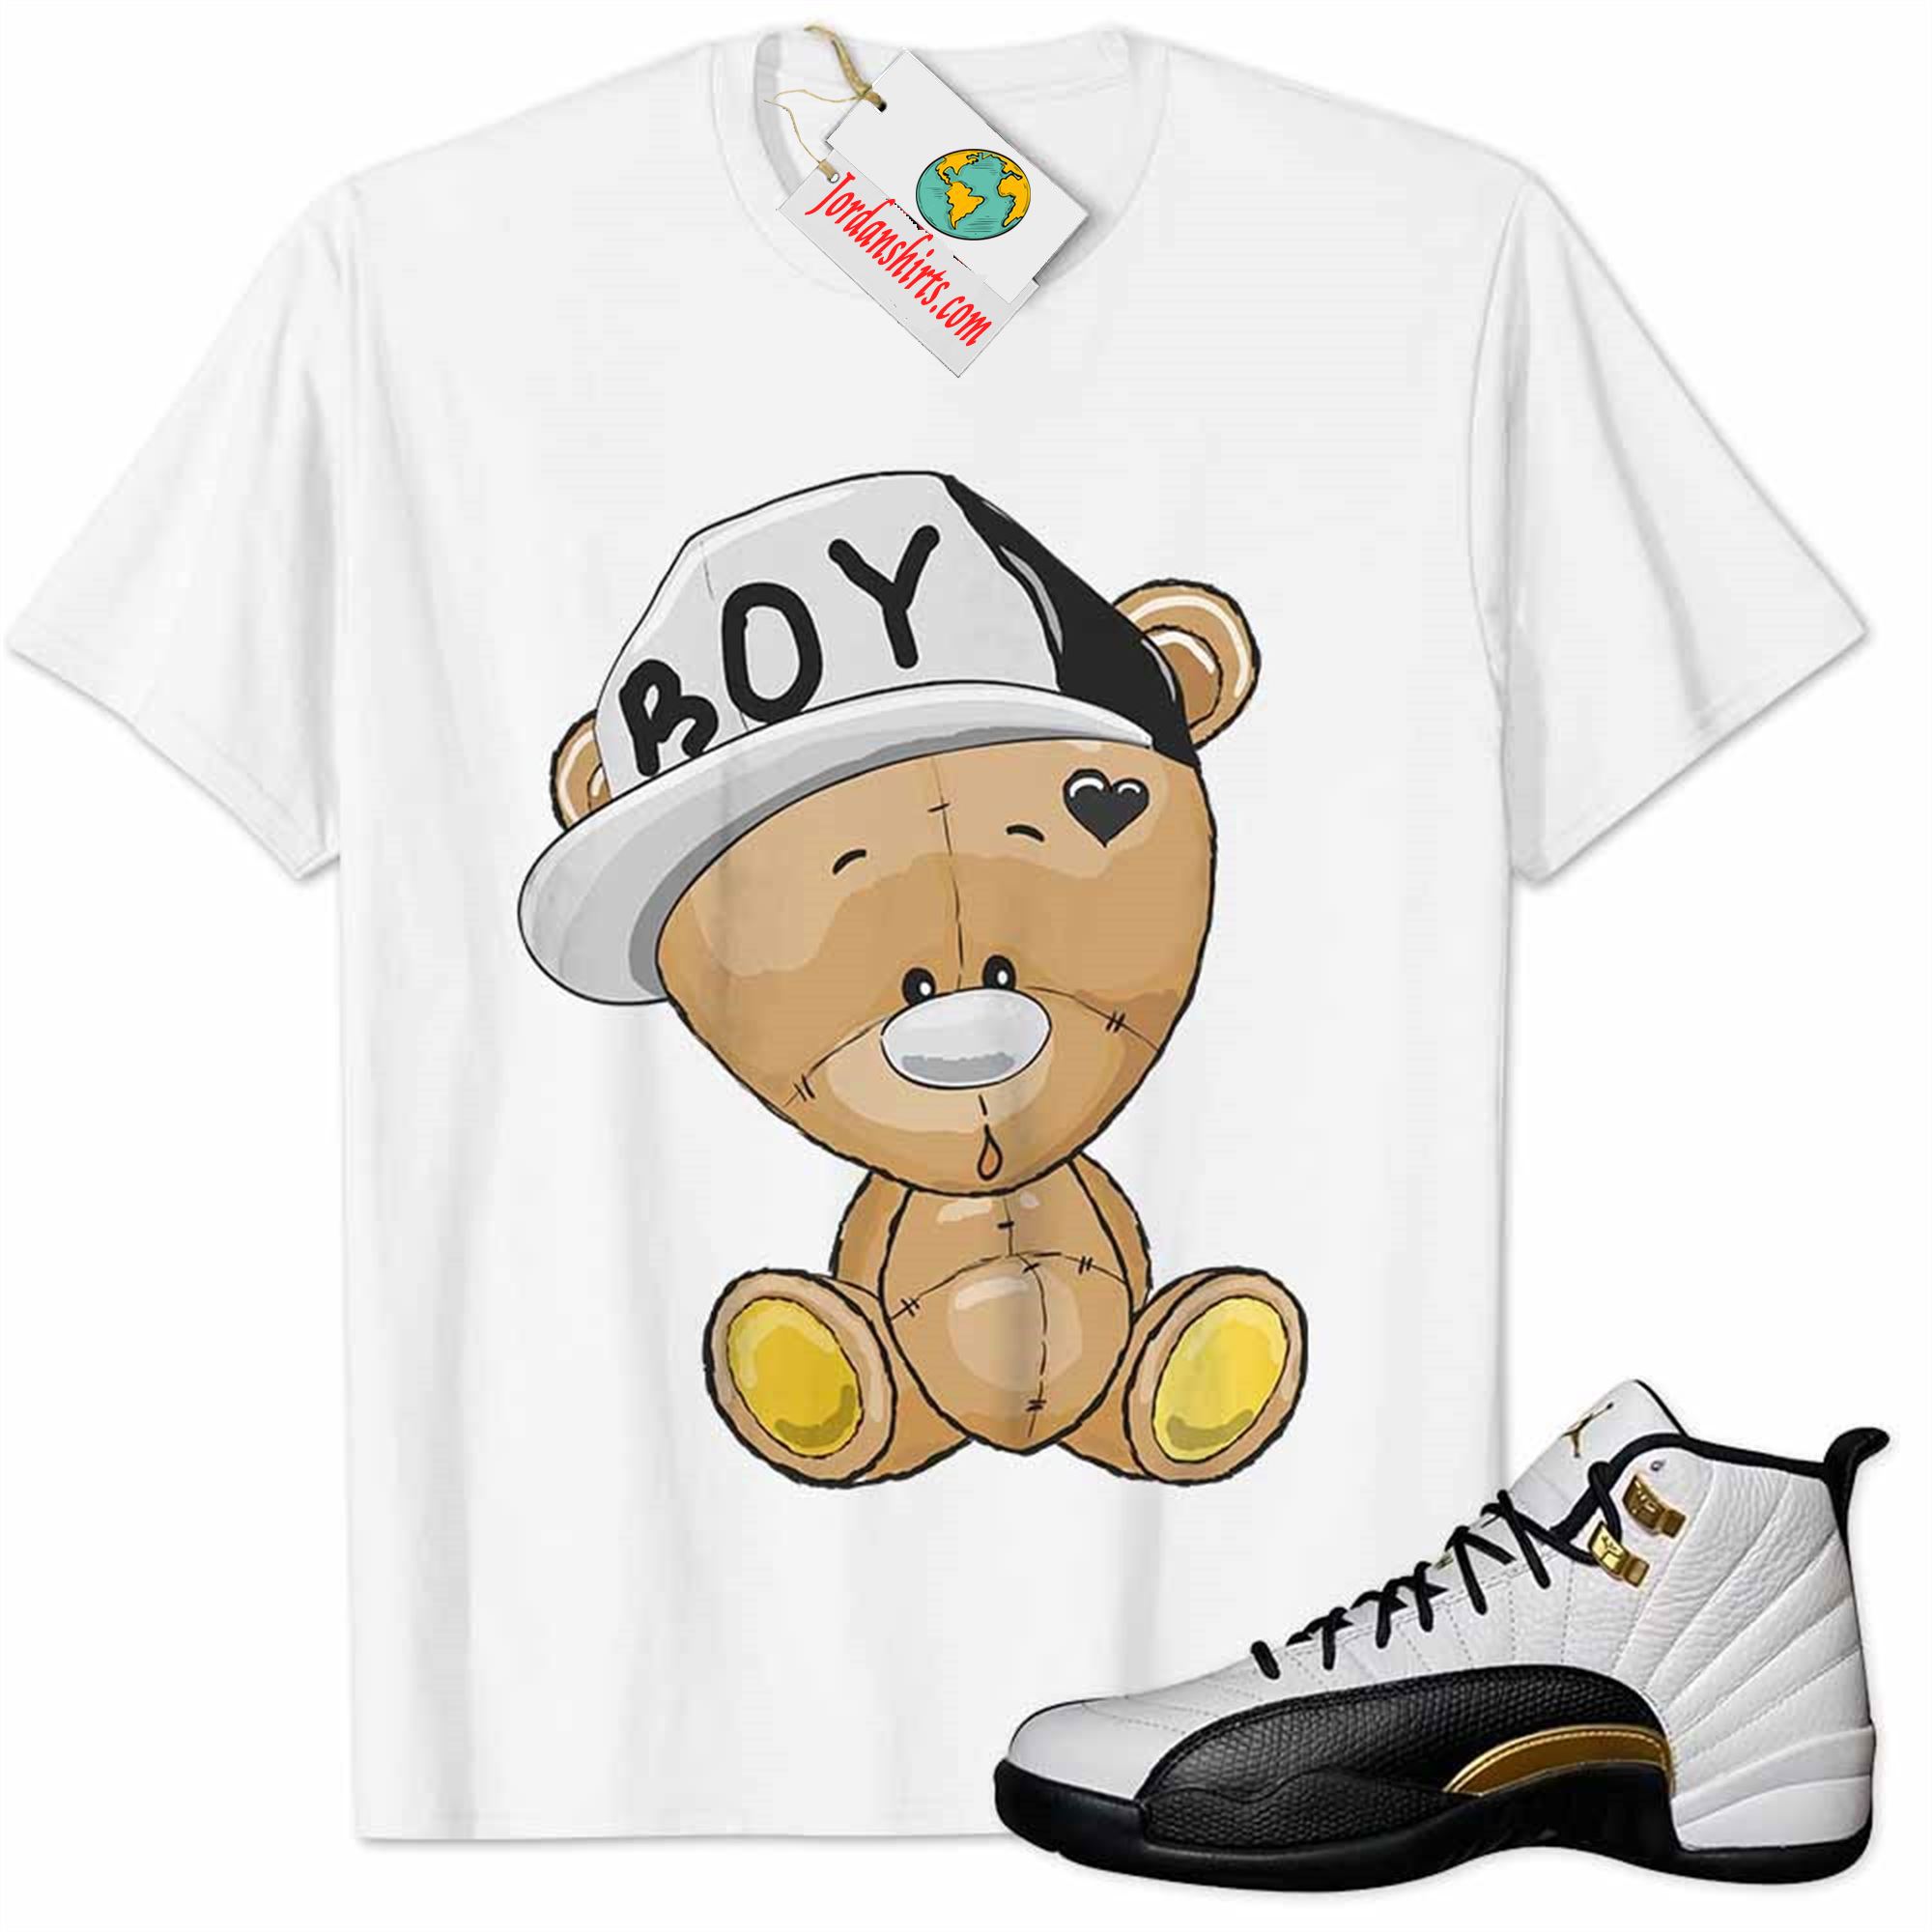 Jordan 12 Shirt, Jordan 12 Royalty Shirt Cute Baby Teddy Bear White Full Size Up To 5xl